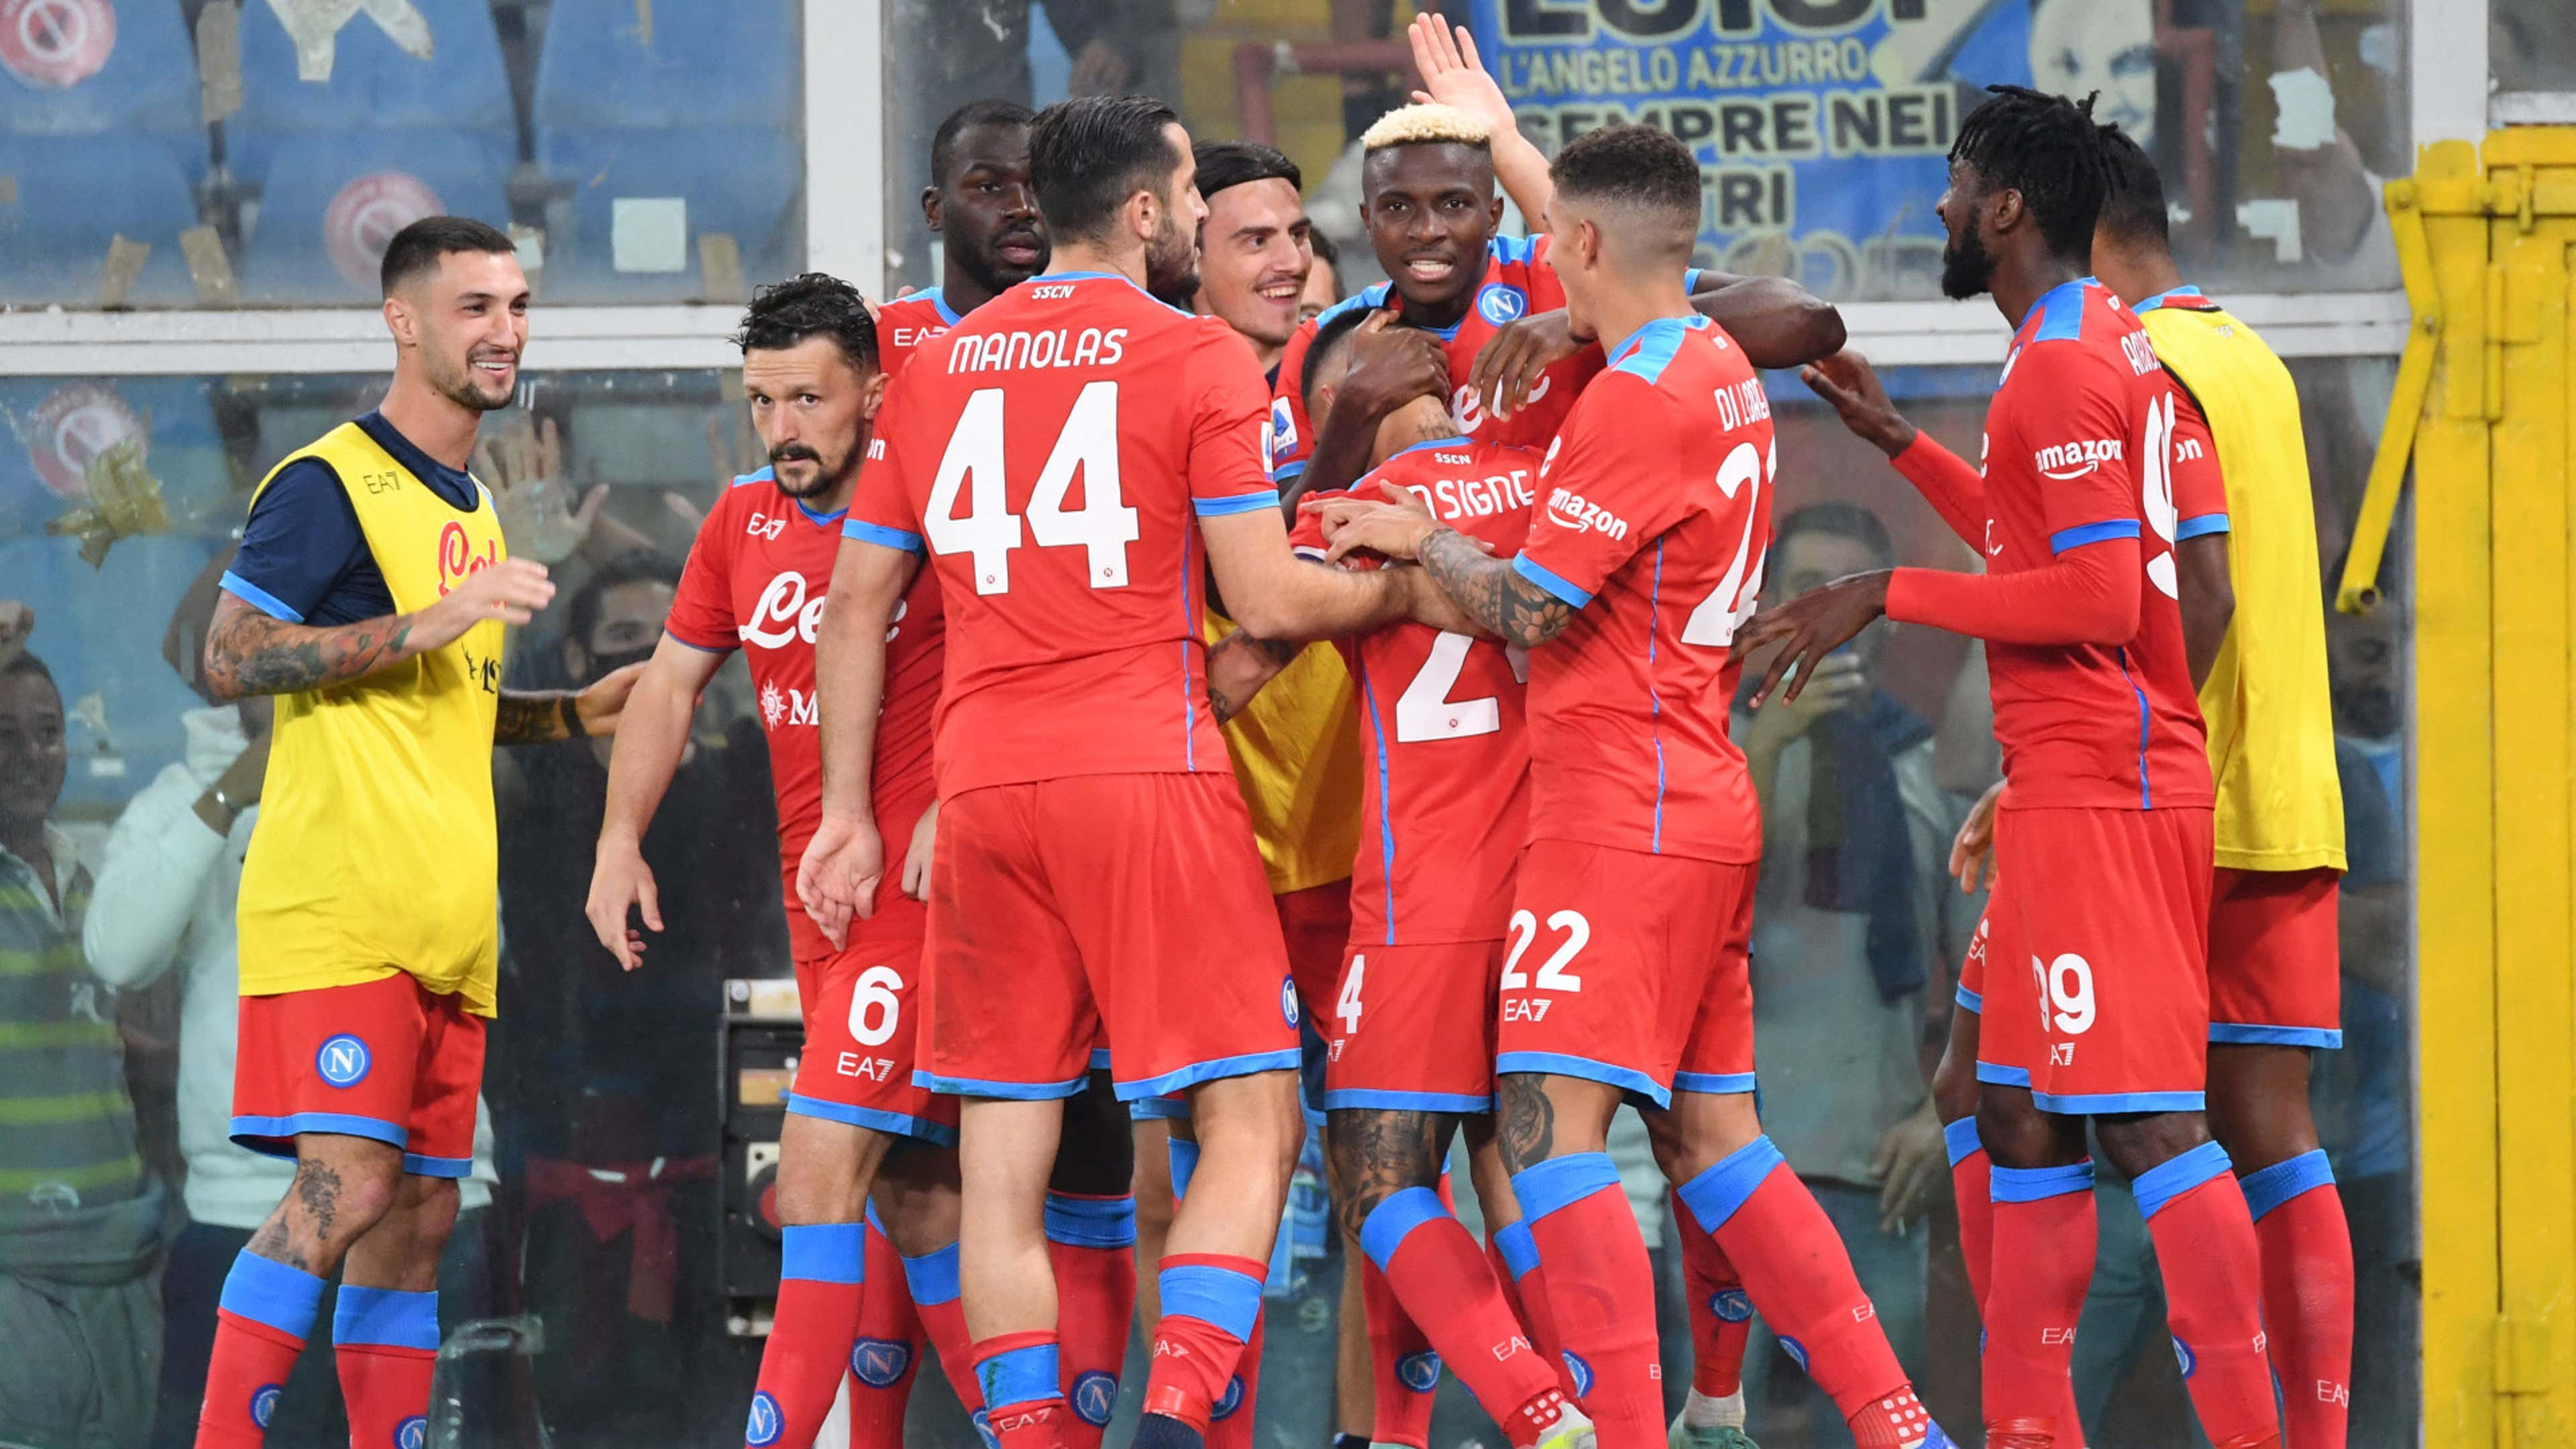 Sampdoria Napoli celebrate